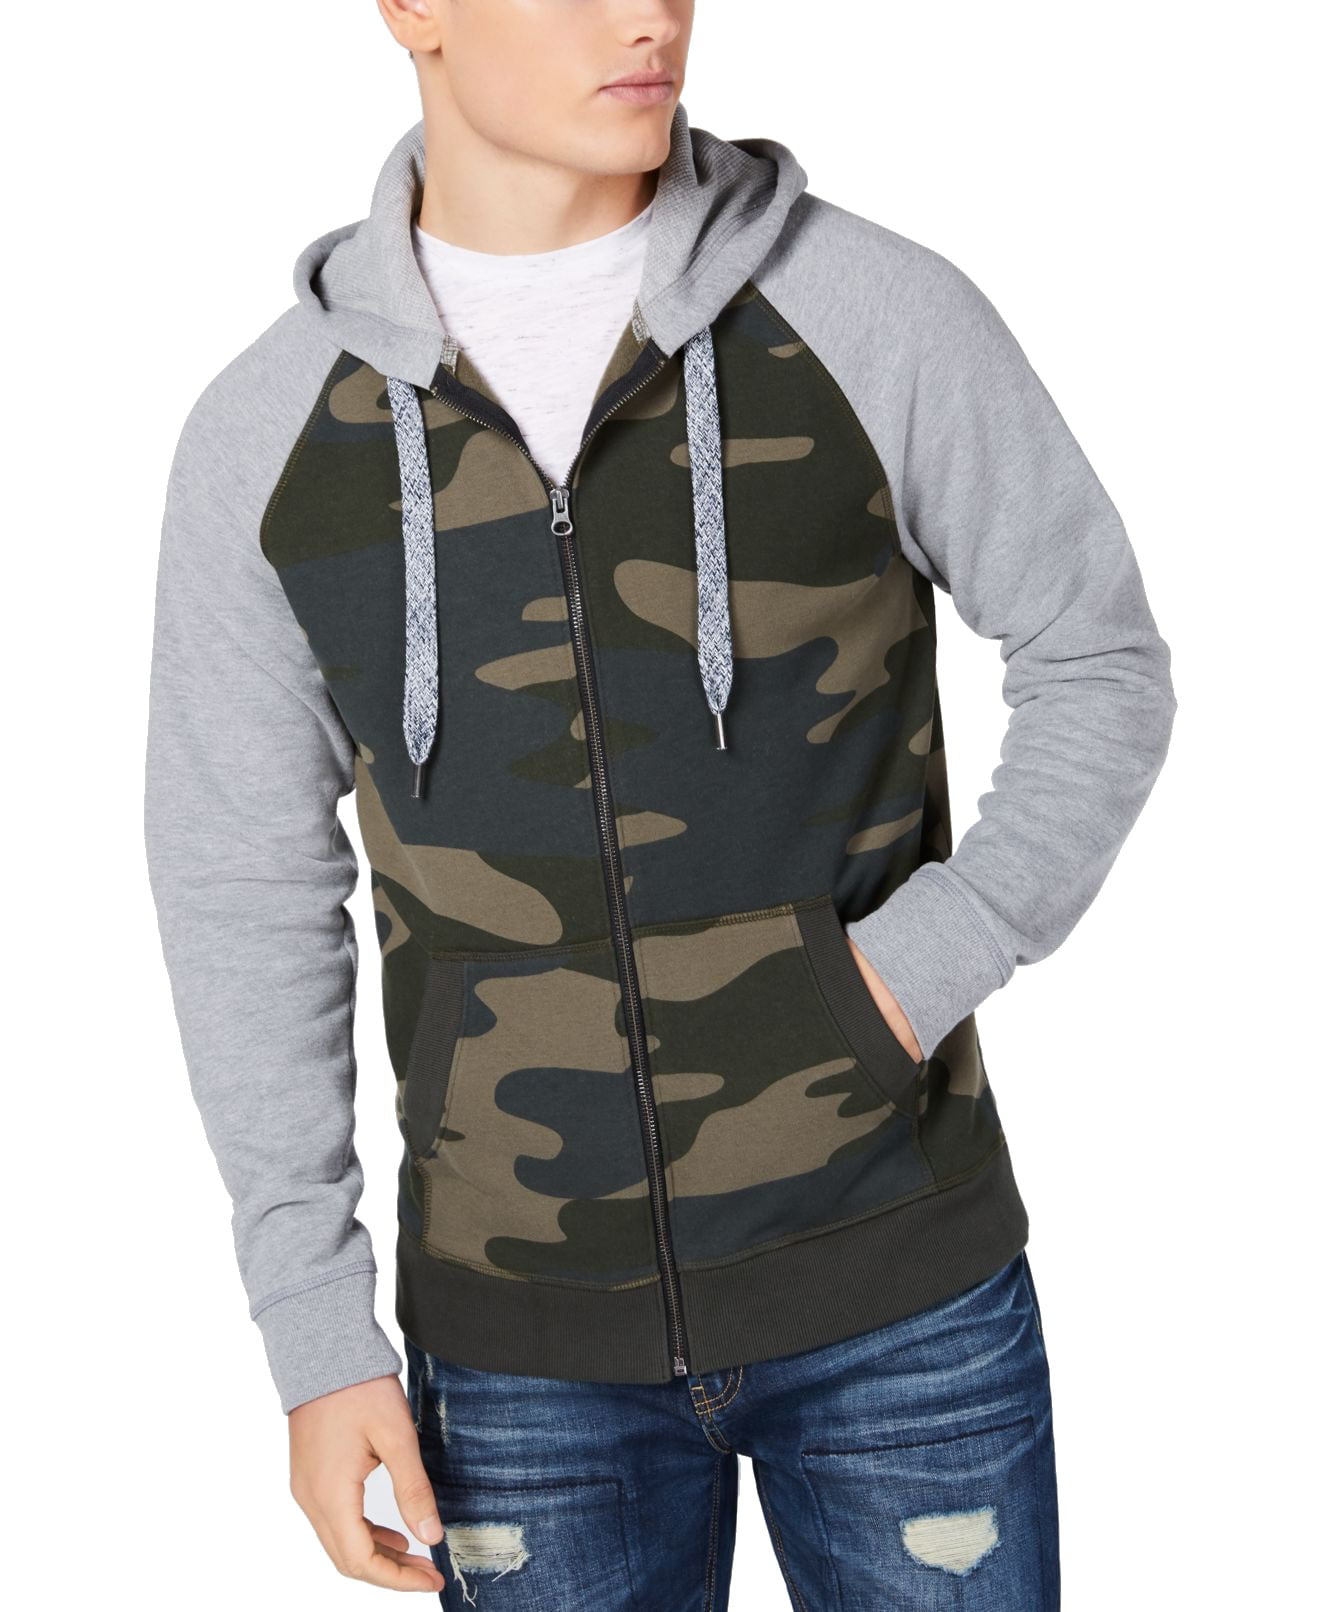 American Rag Solid Full-Zip Fleece Sweatshirt Deep Black Size XL